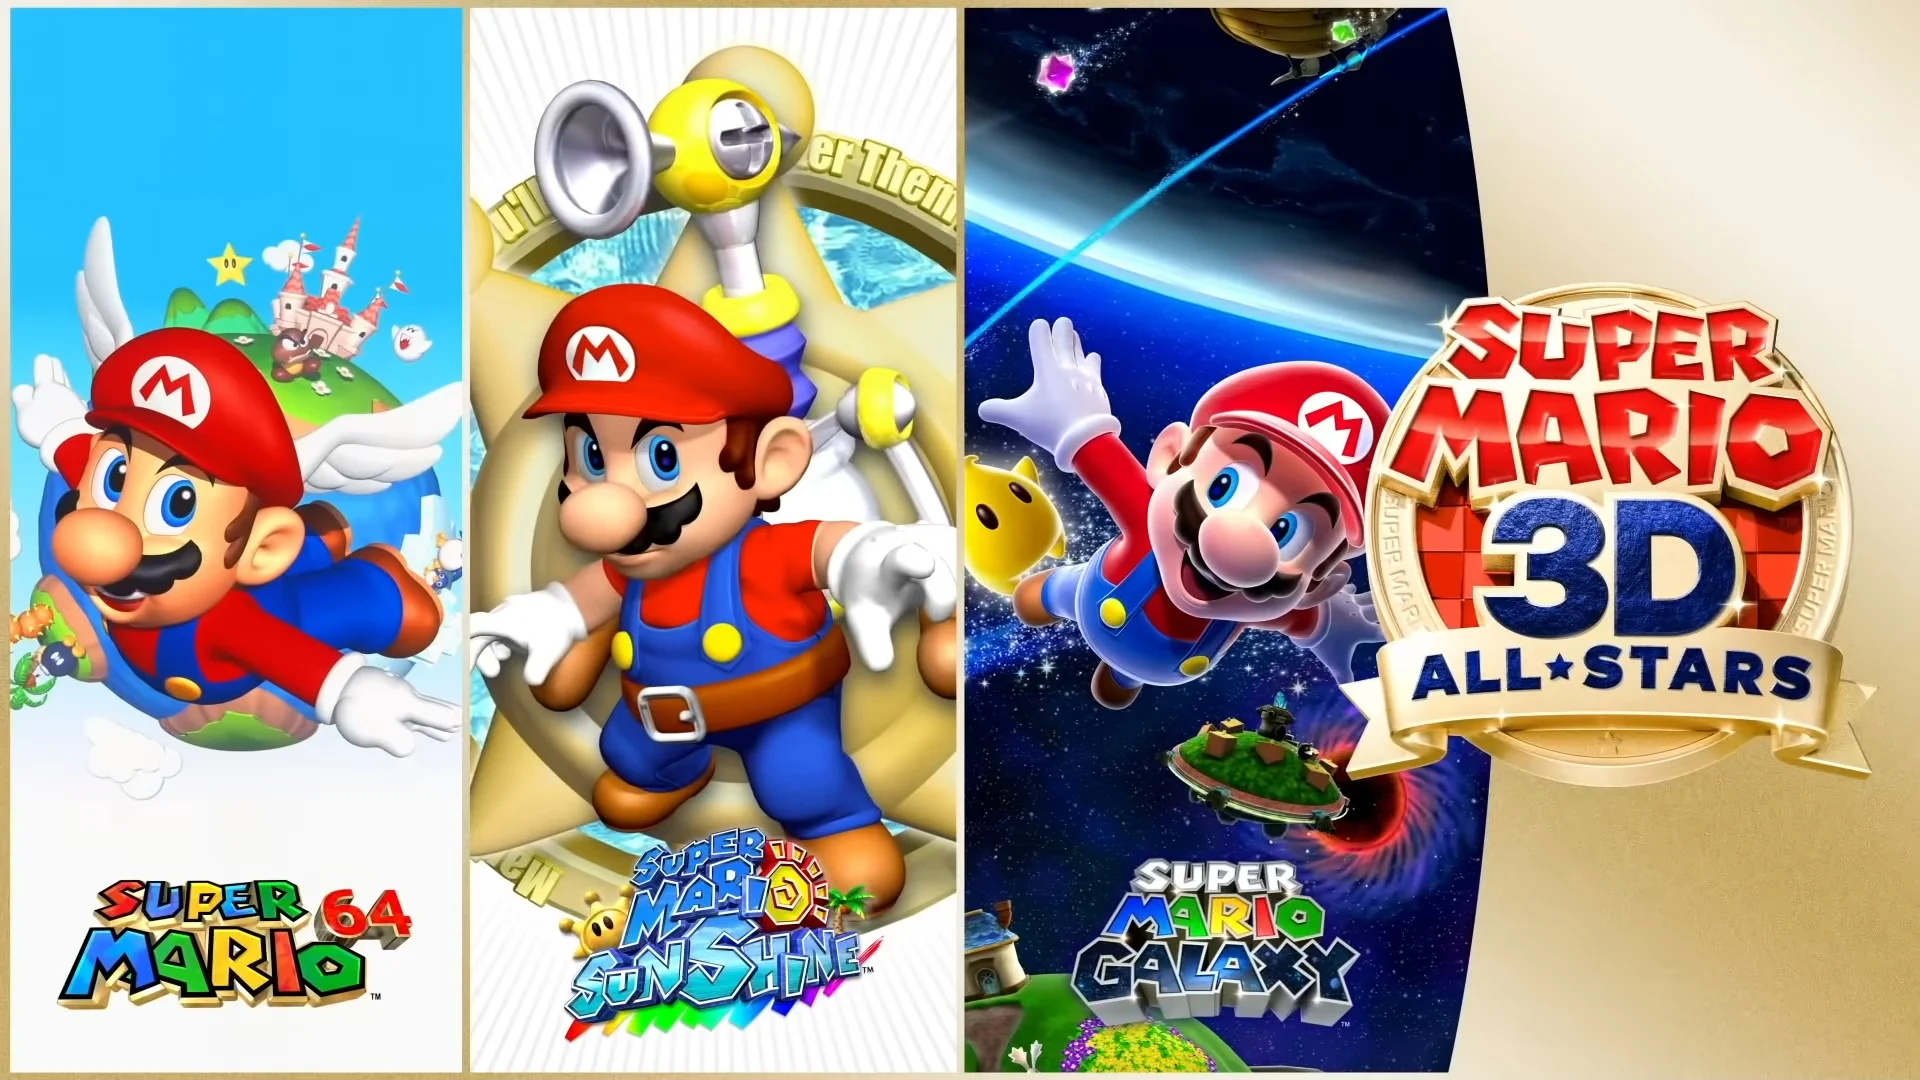 premie analyseren Lijkenhuis Super Mario 3D All-Stars leaks in full online days before release,  confirmed to use emulation - NotebookCheck.net News